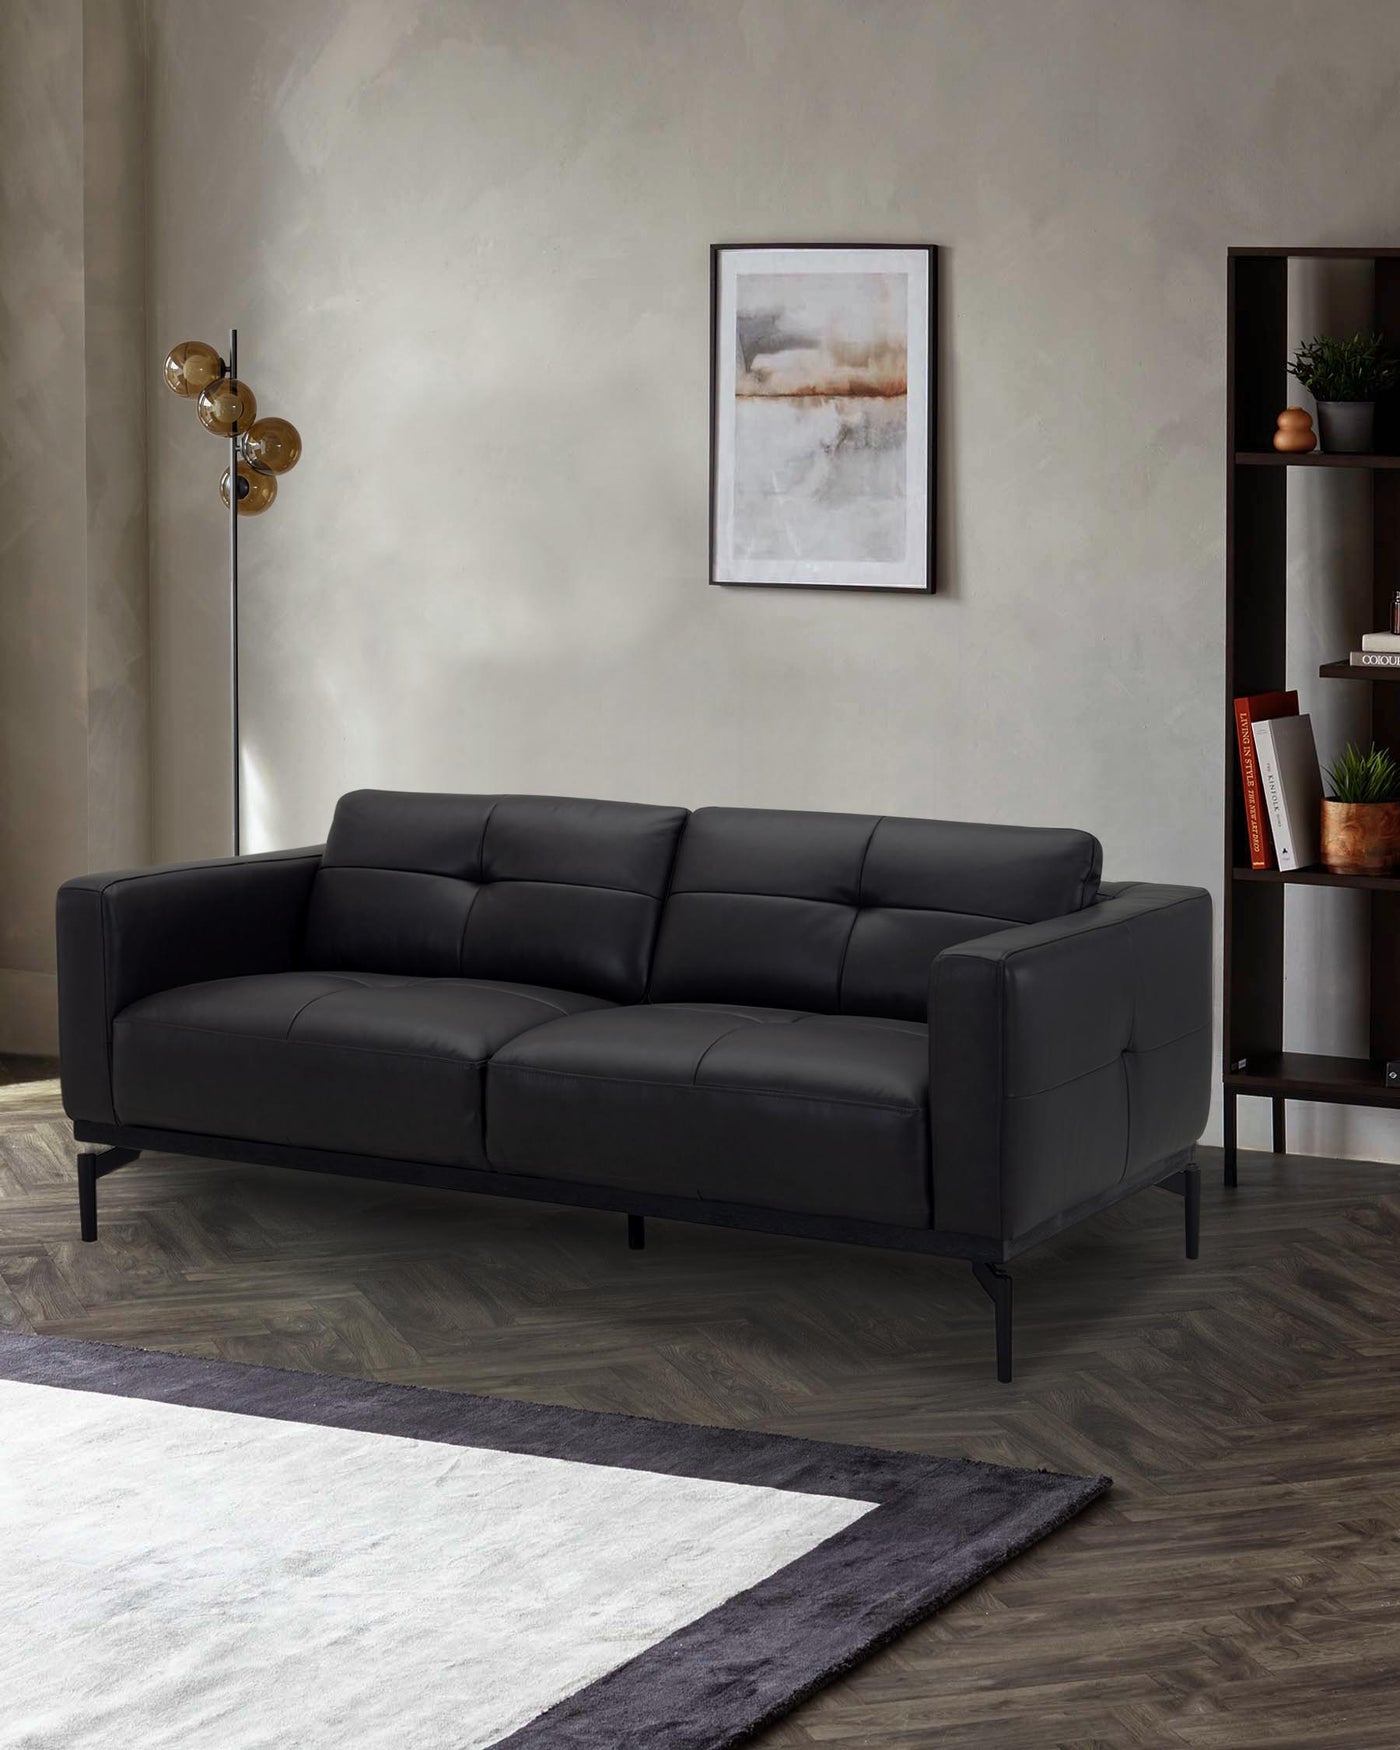 Colton black leather 2 seater sofa